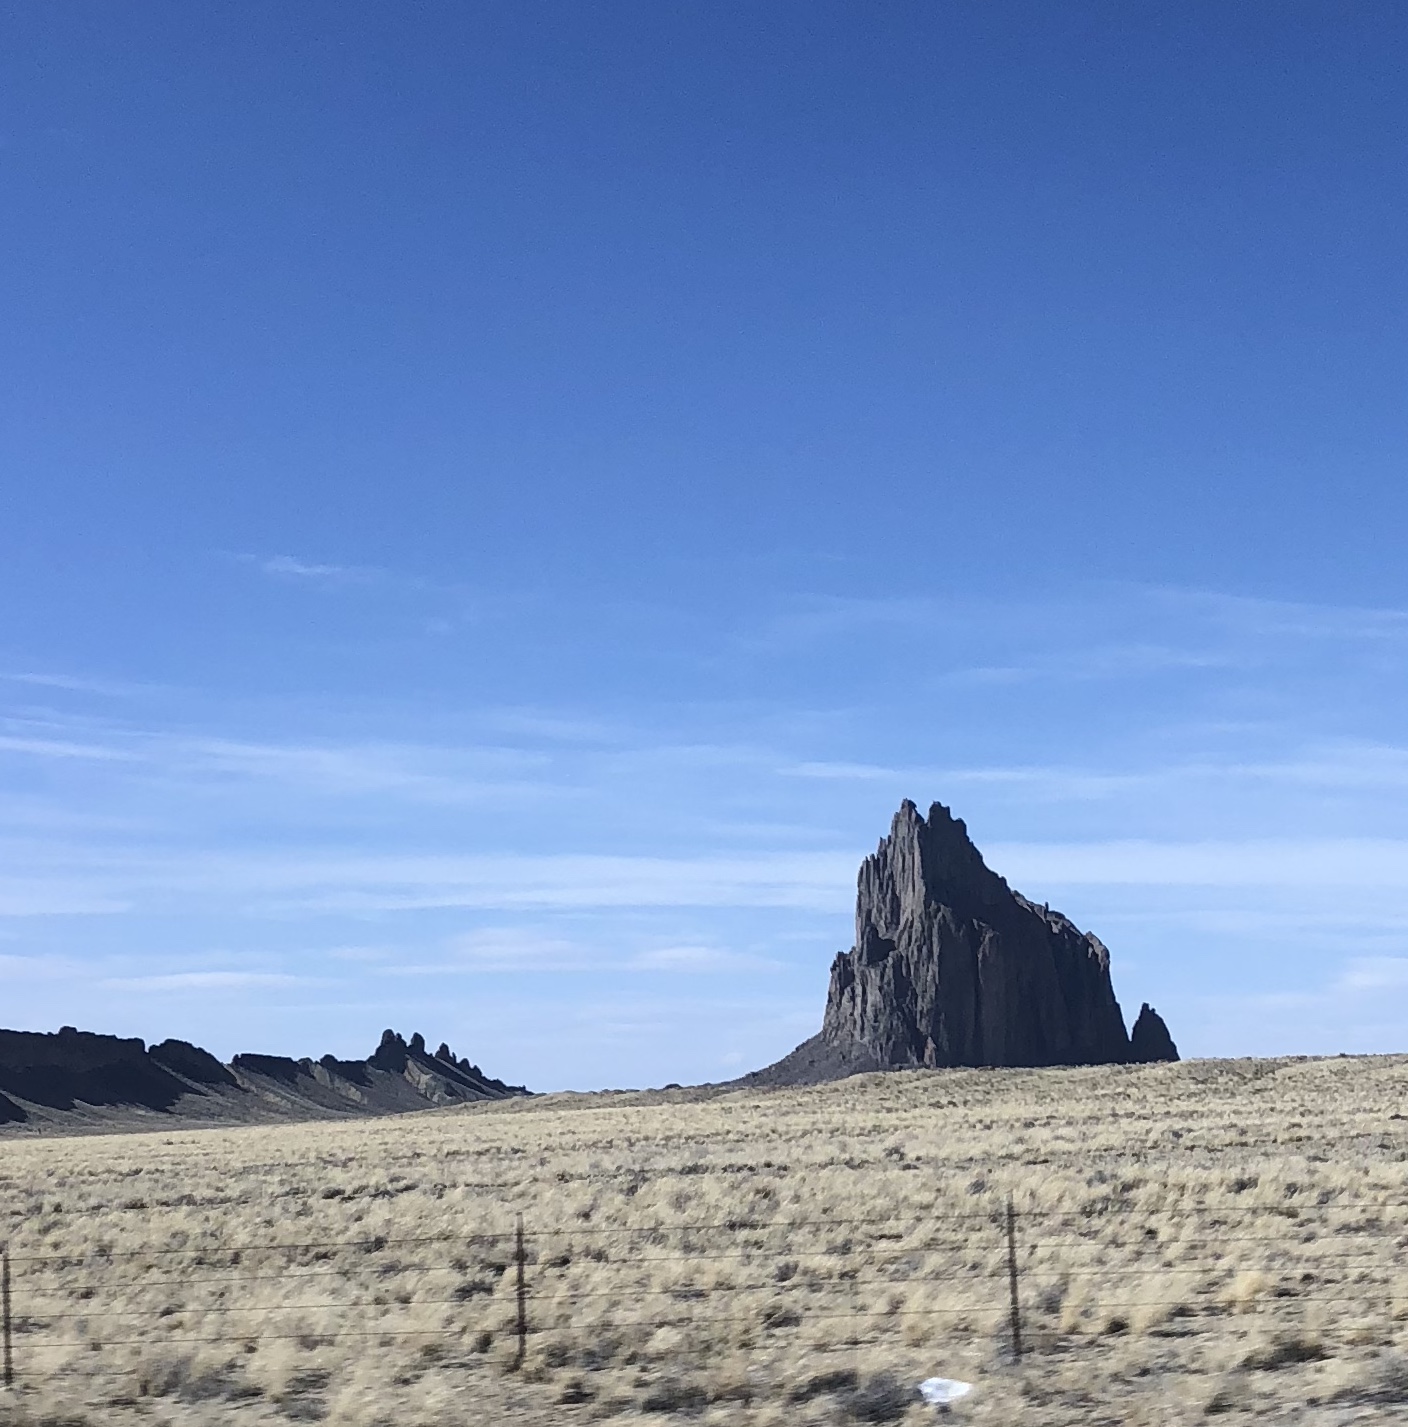 The Shiprock--Tsé Bit’a’í--literally, the Rock that has Wings